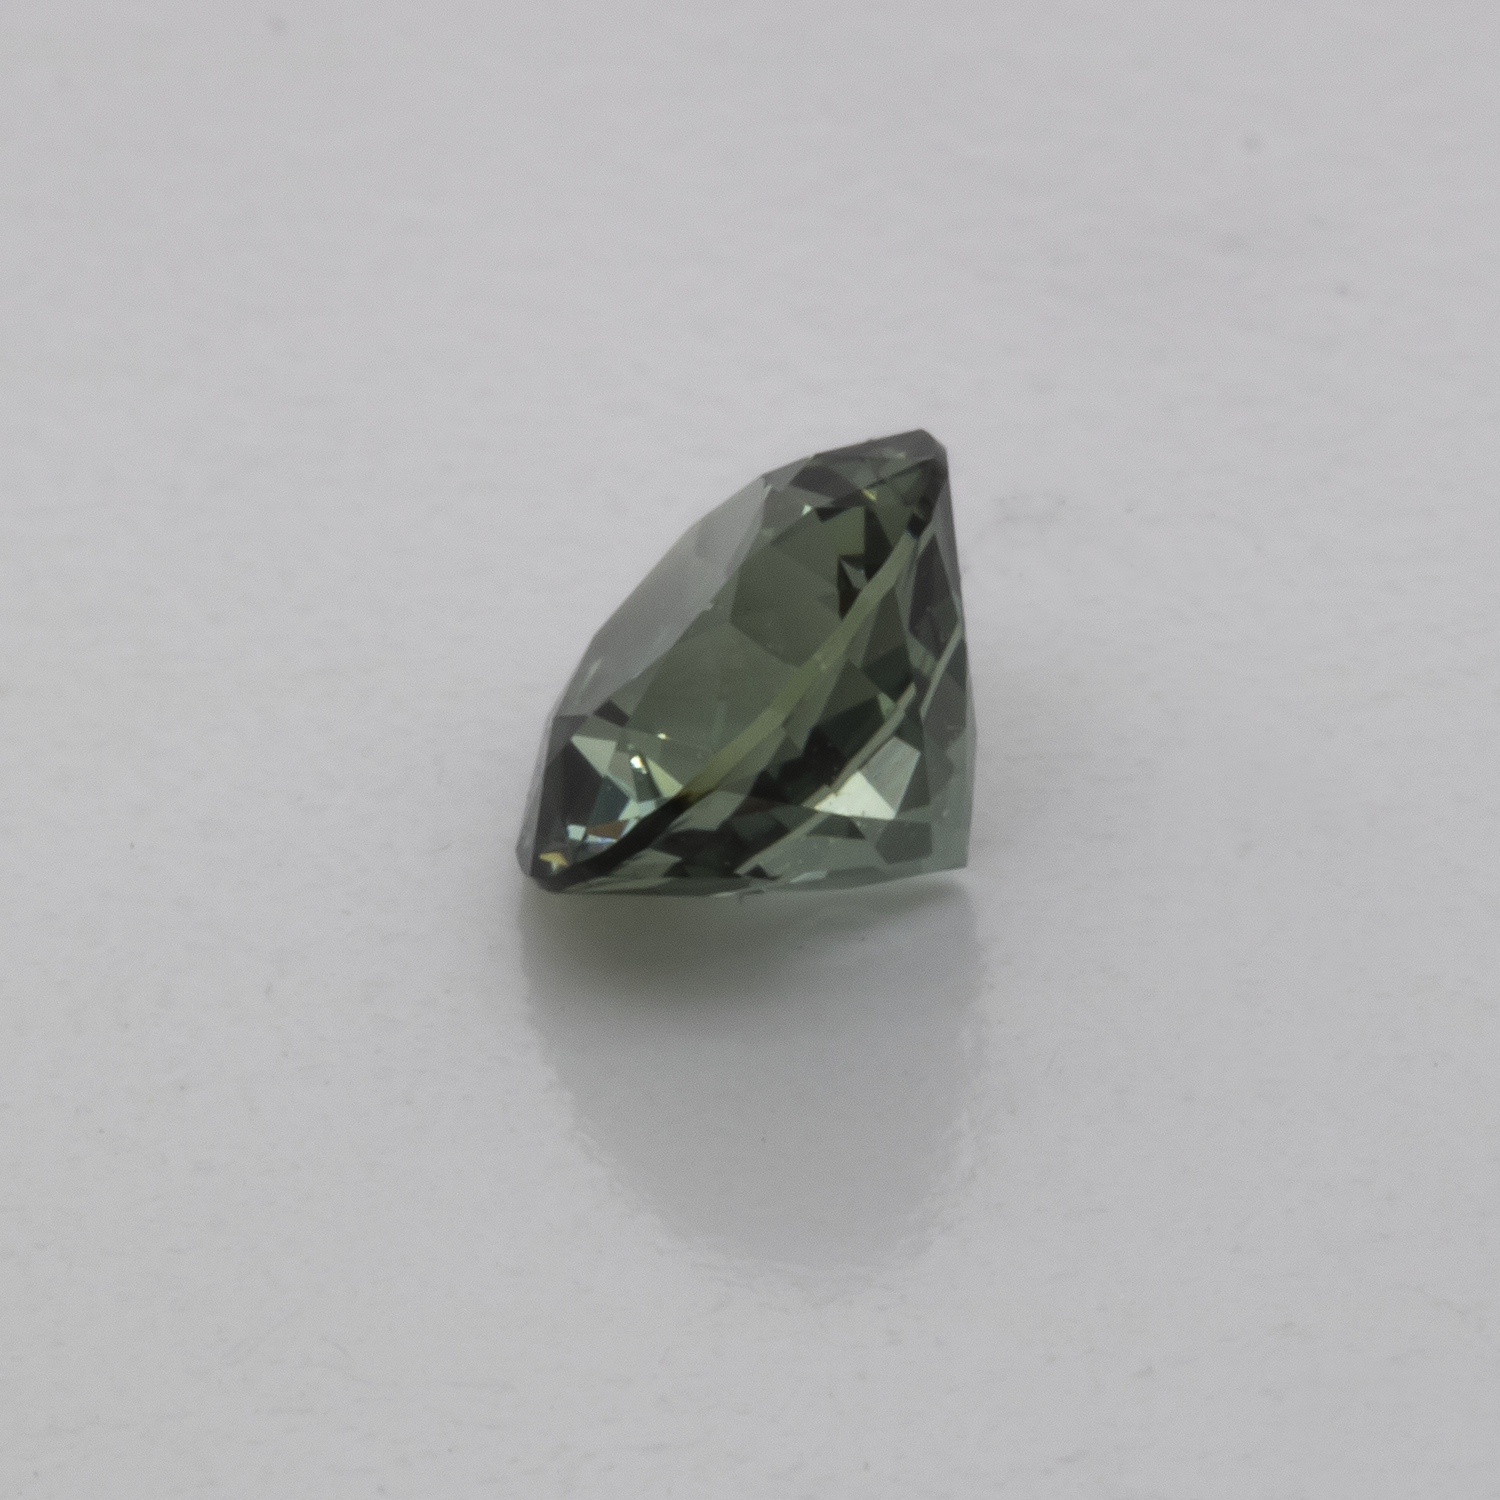 Saphir - blau/grün, rund, 4,8x4,8 mm, 0,53 cts, Nr. XSR11186